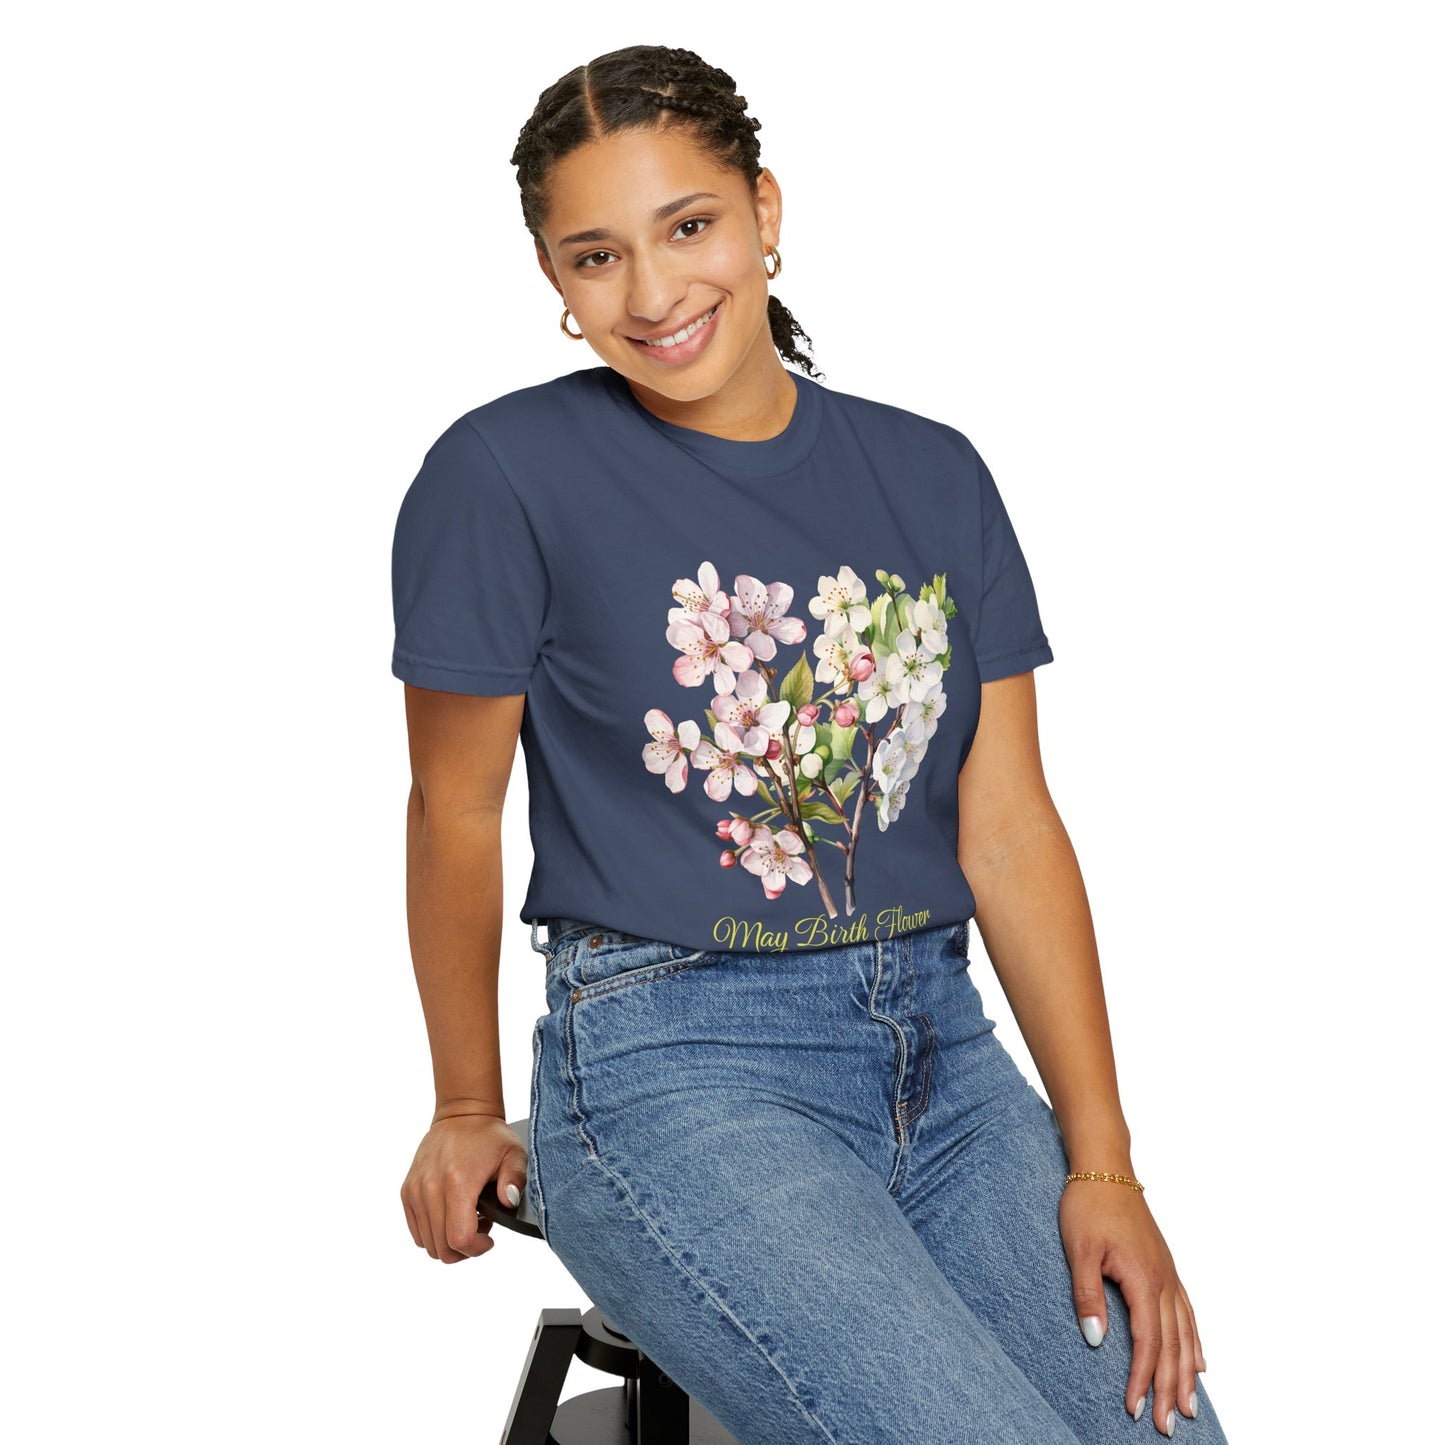 May Birth Flower "Hawthorn" (For Dark Fabric) - Unisex Garment-Dyed T-shirt